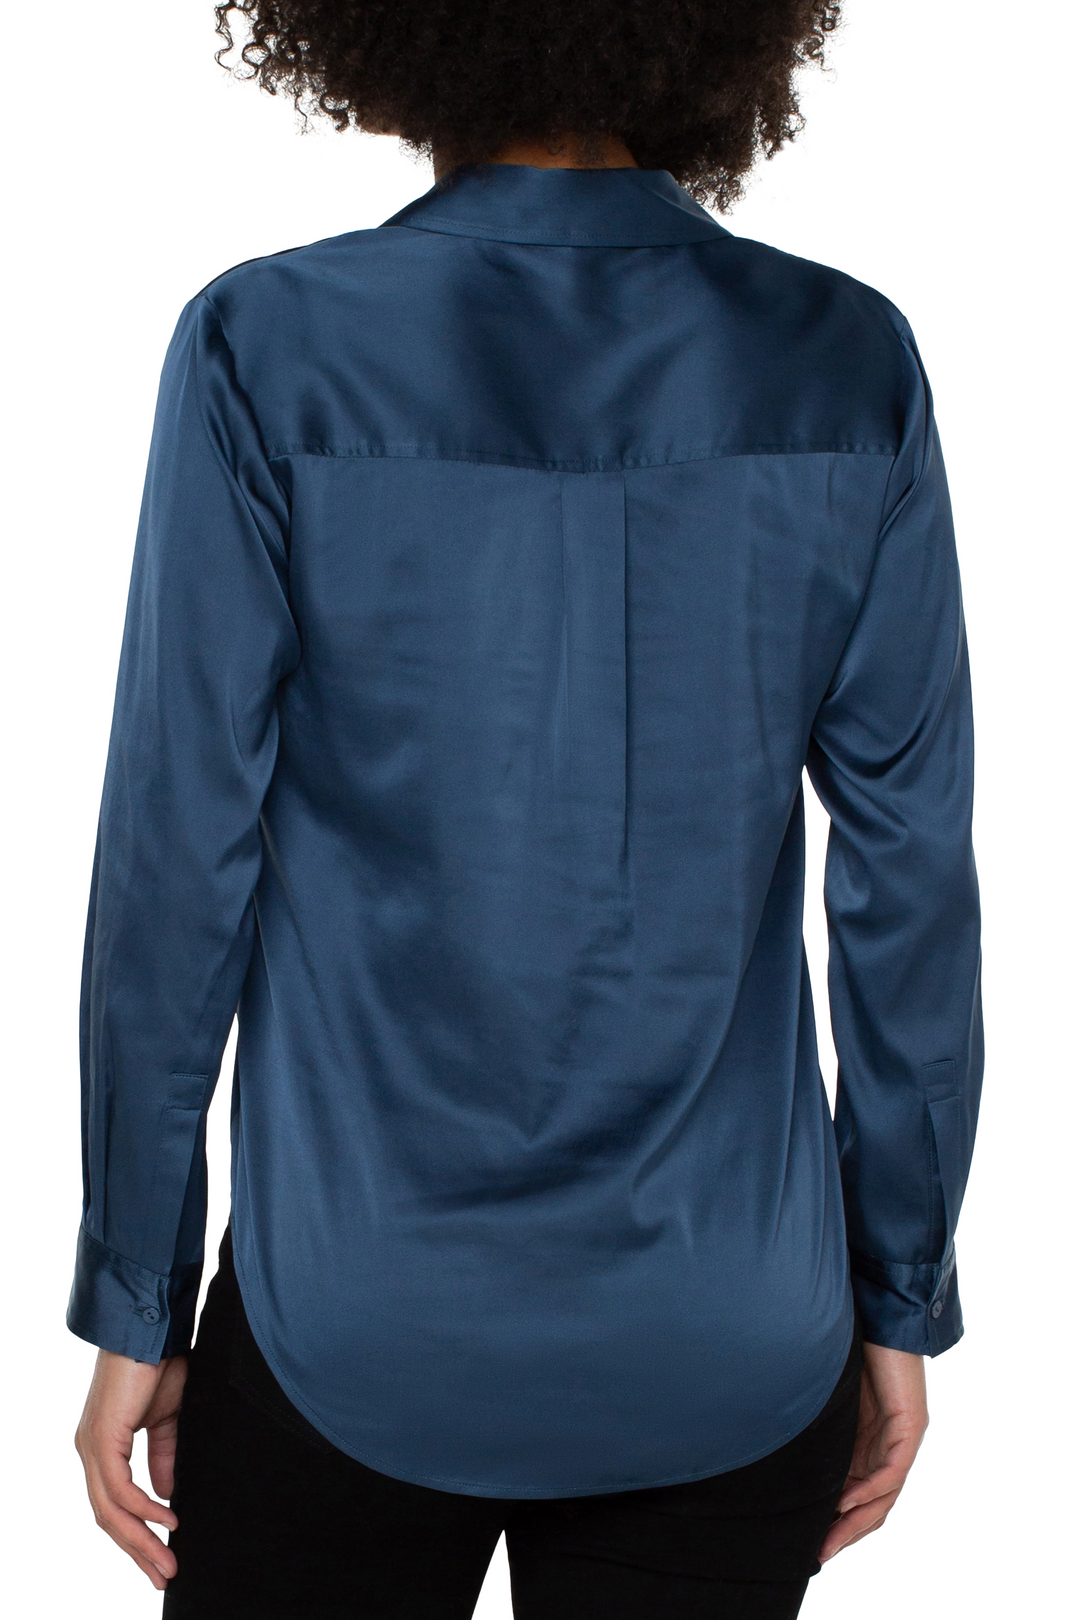 Button Front Woven Blouse - Shibori Blue